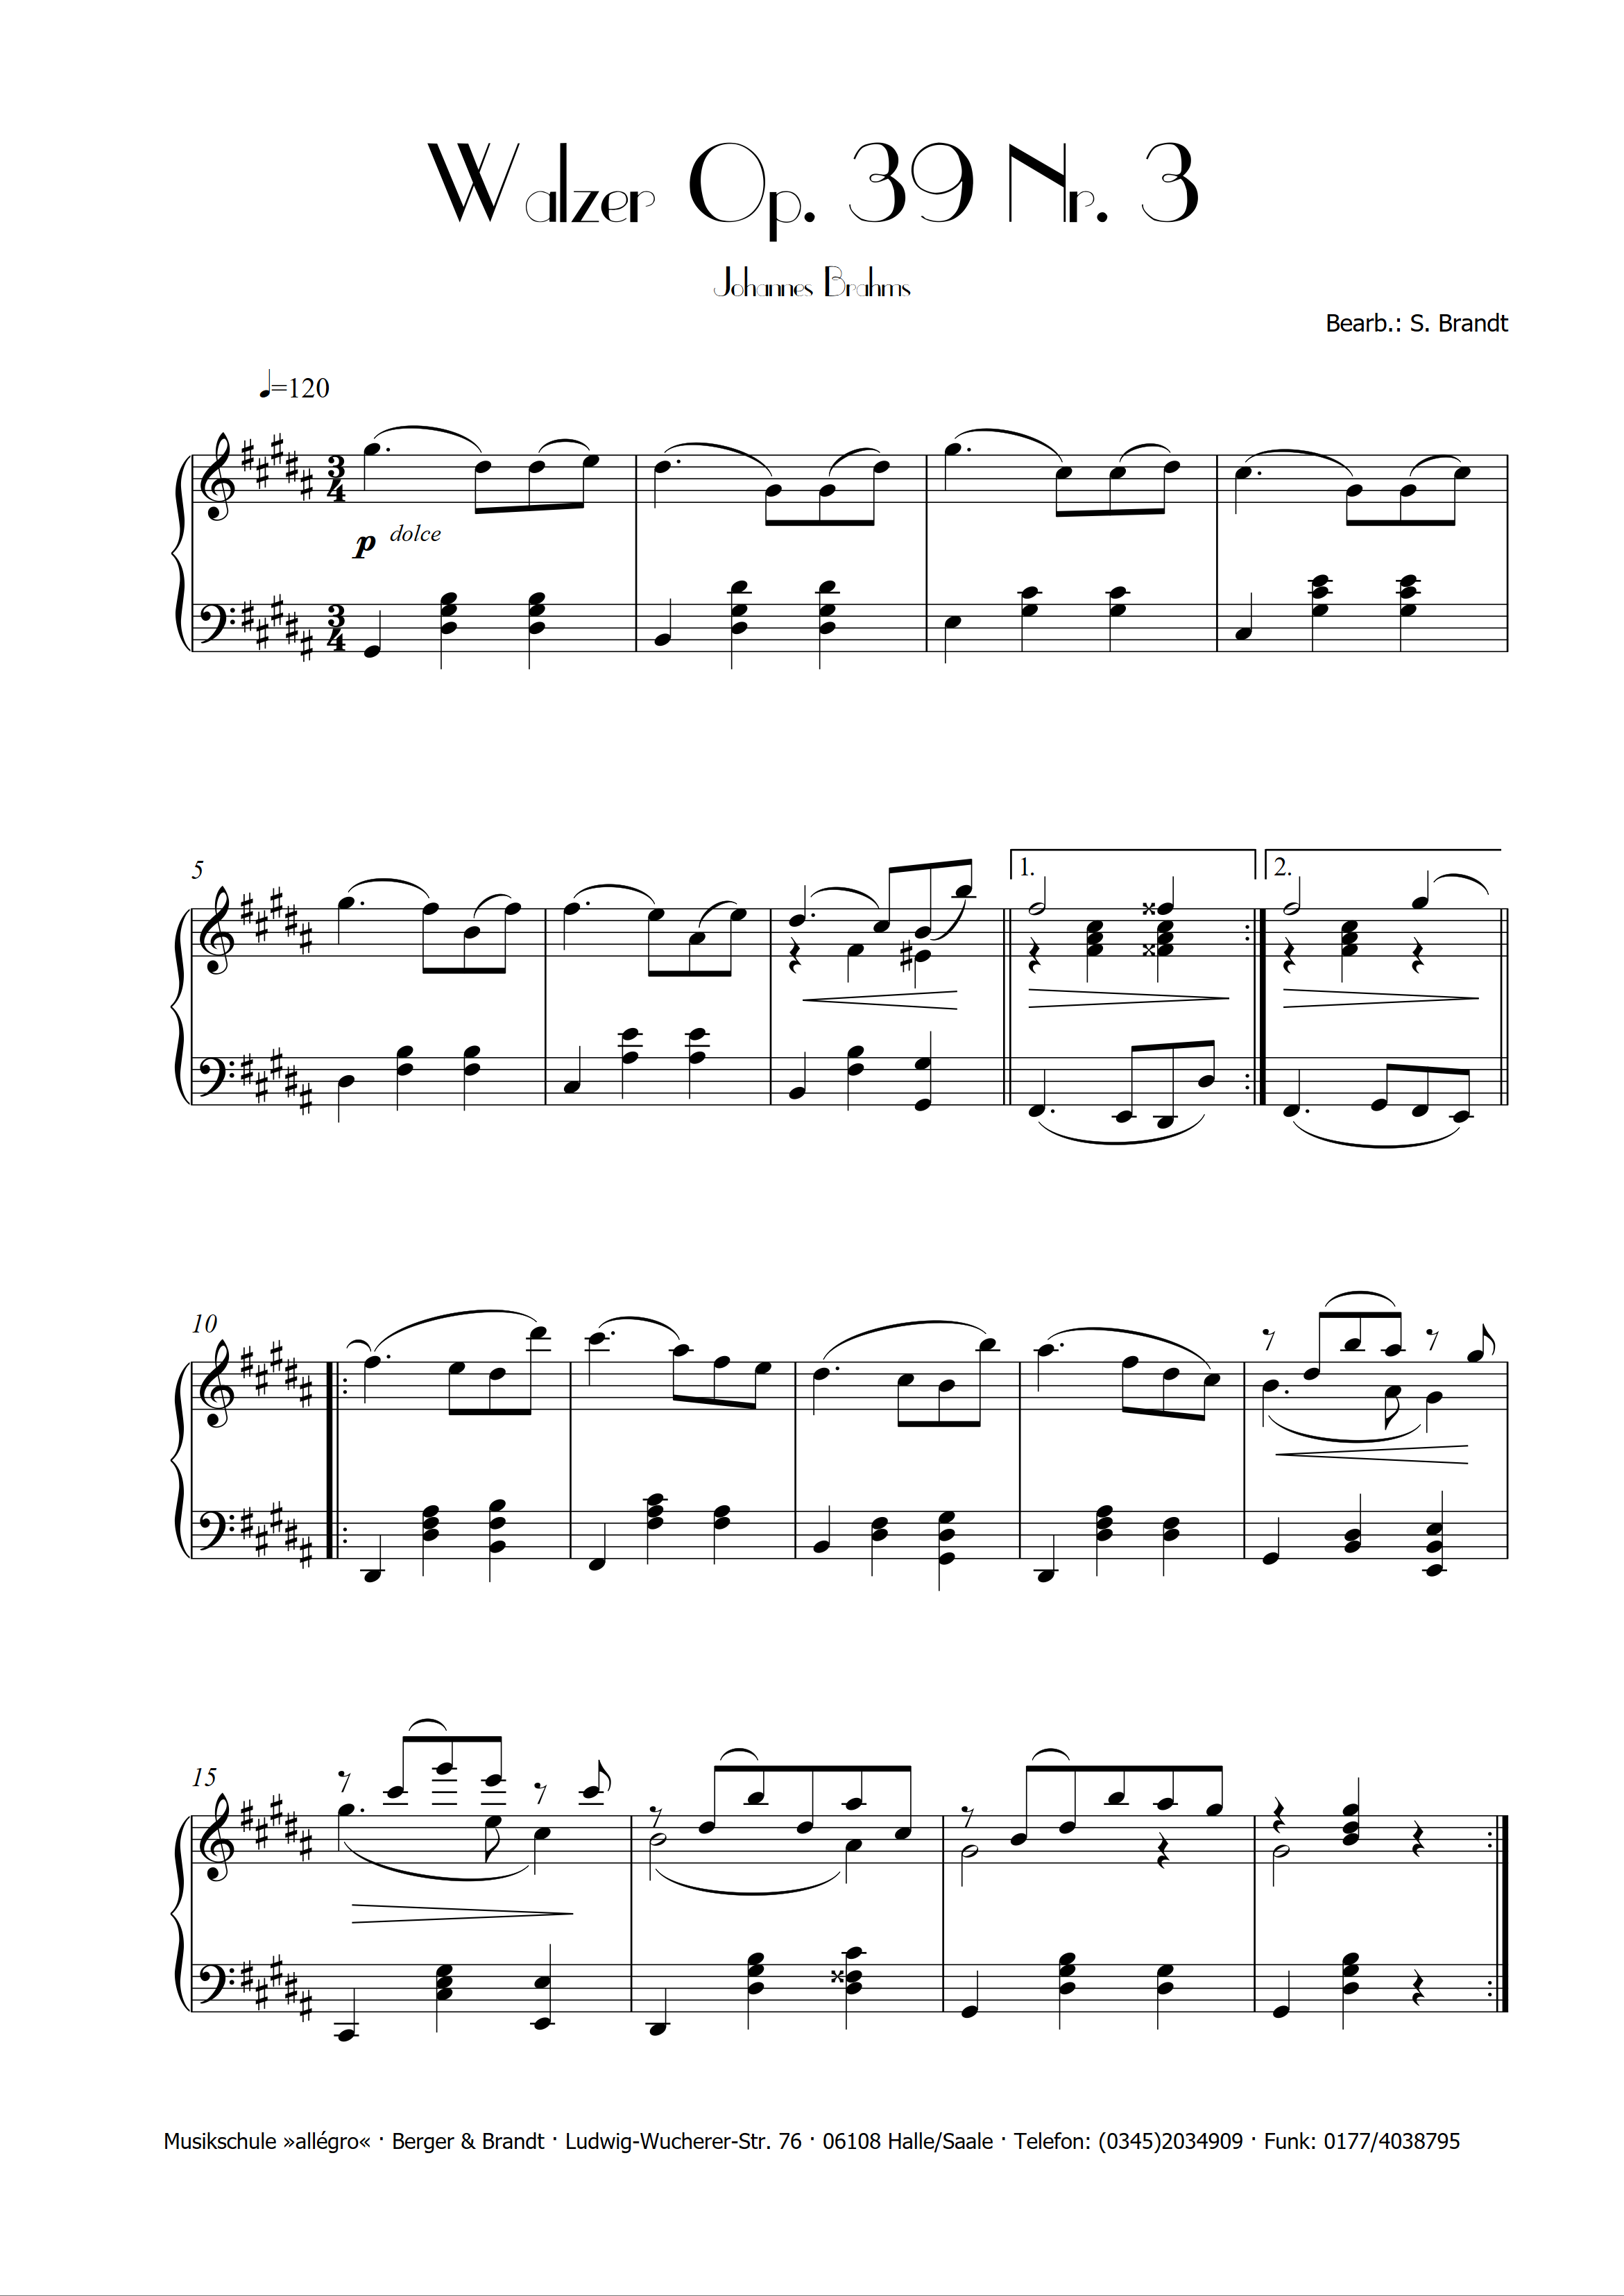 Walzer Op. 39 Nr. 3 Johannes Brahms